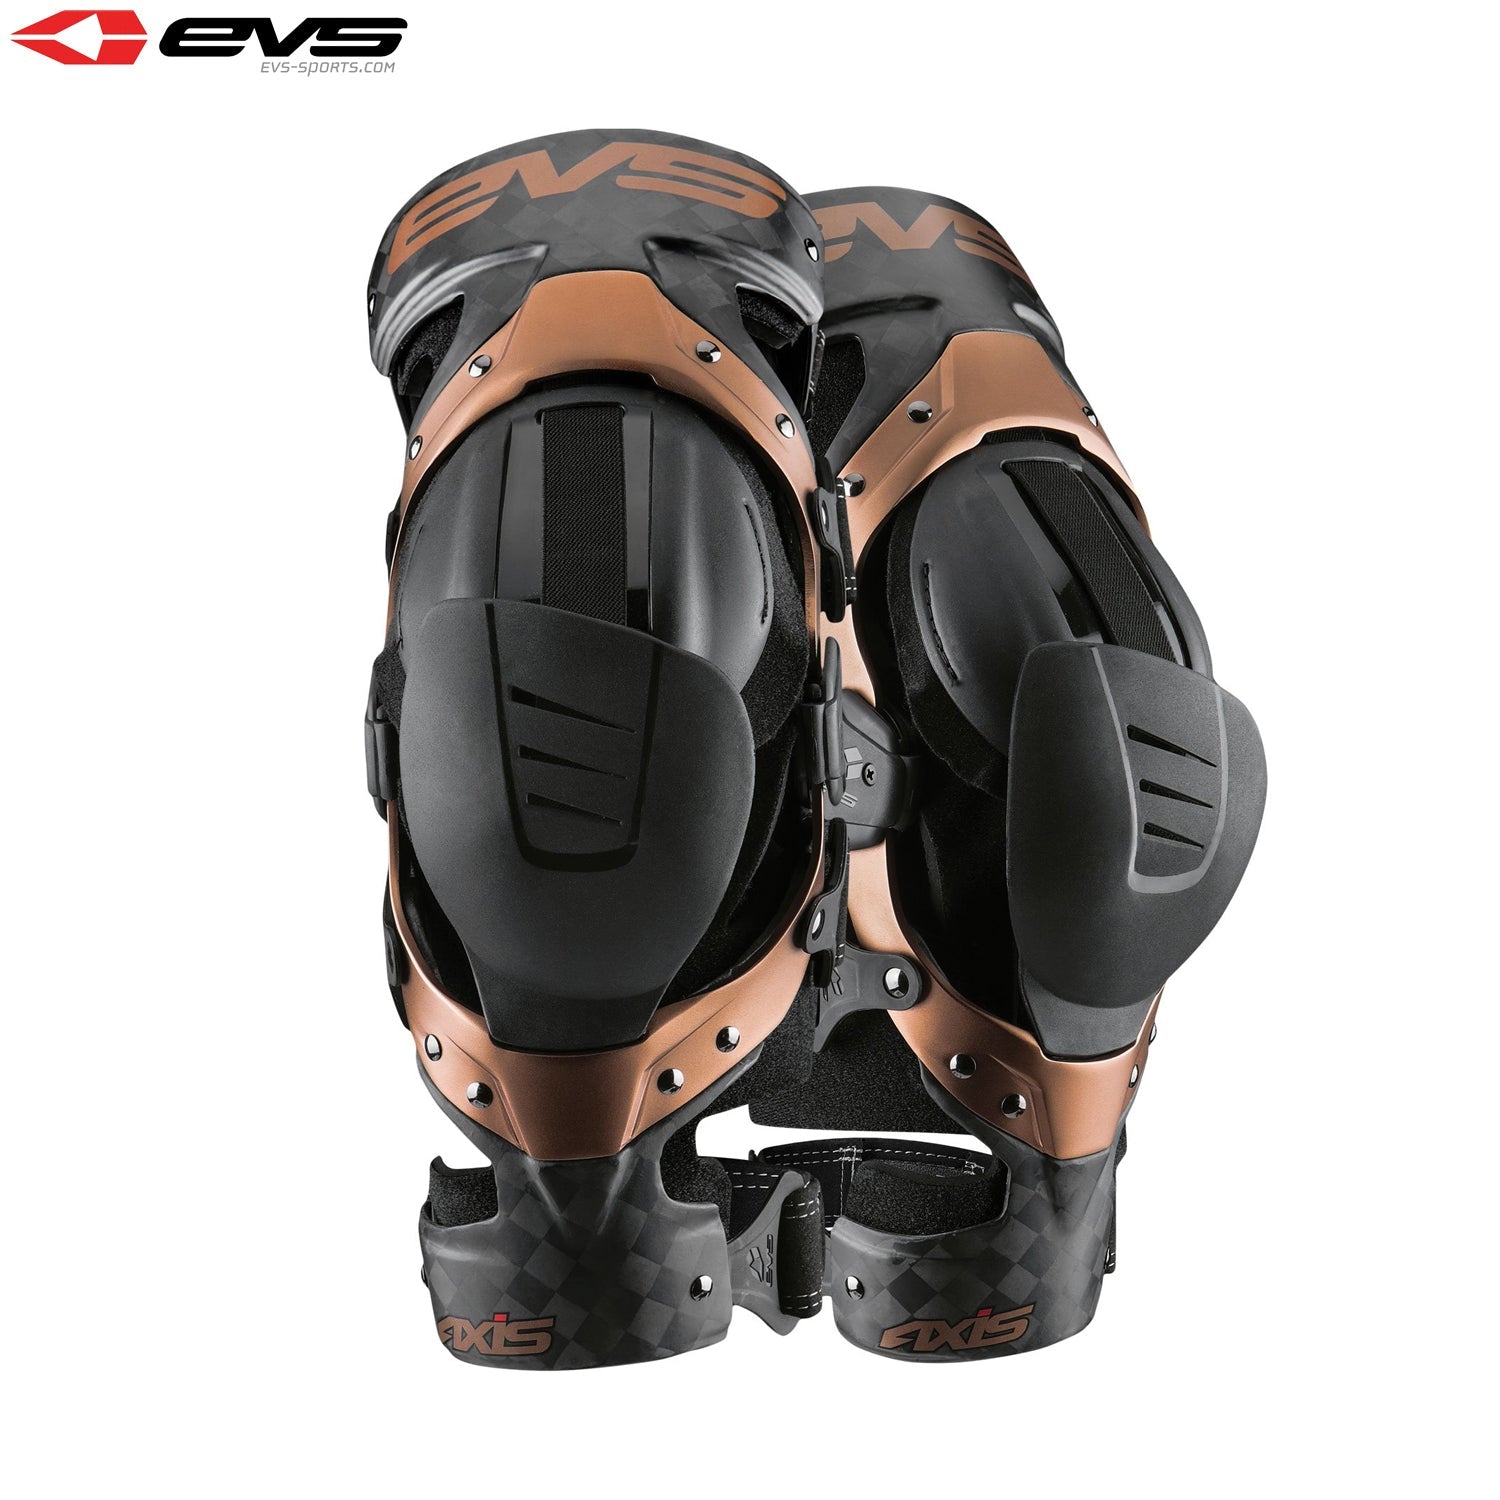 EVS Axis Pro Knee Brace - Pairs (Black/Copper) Small - Pair - S / Black/Copper - EVS